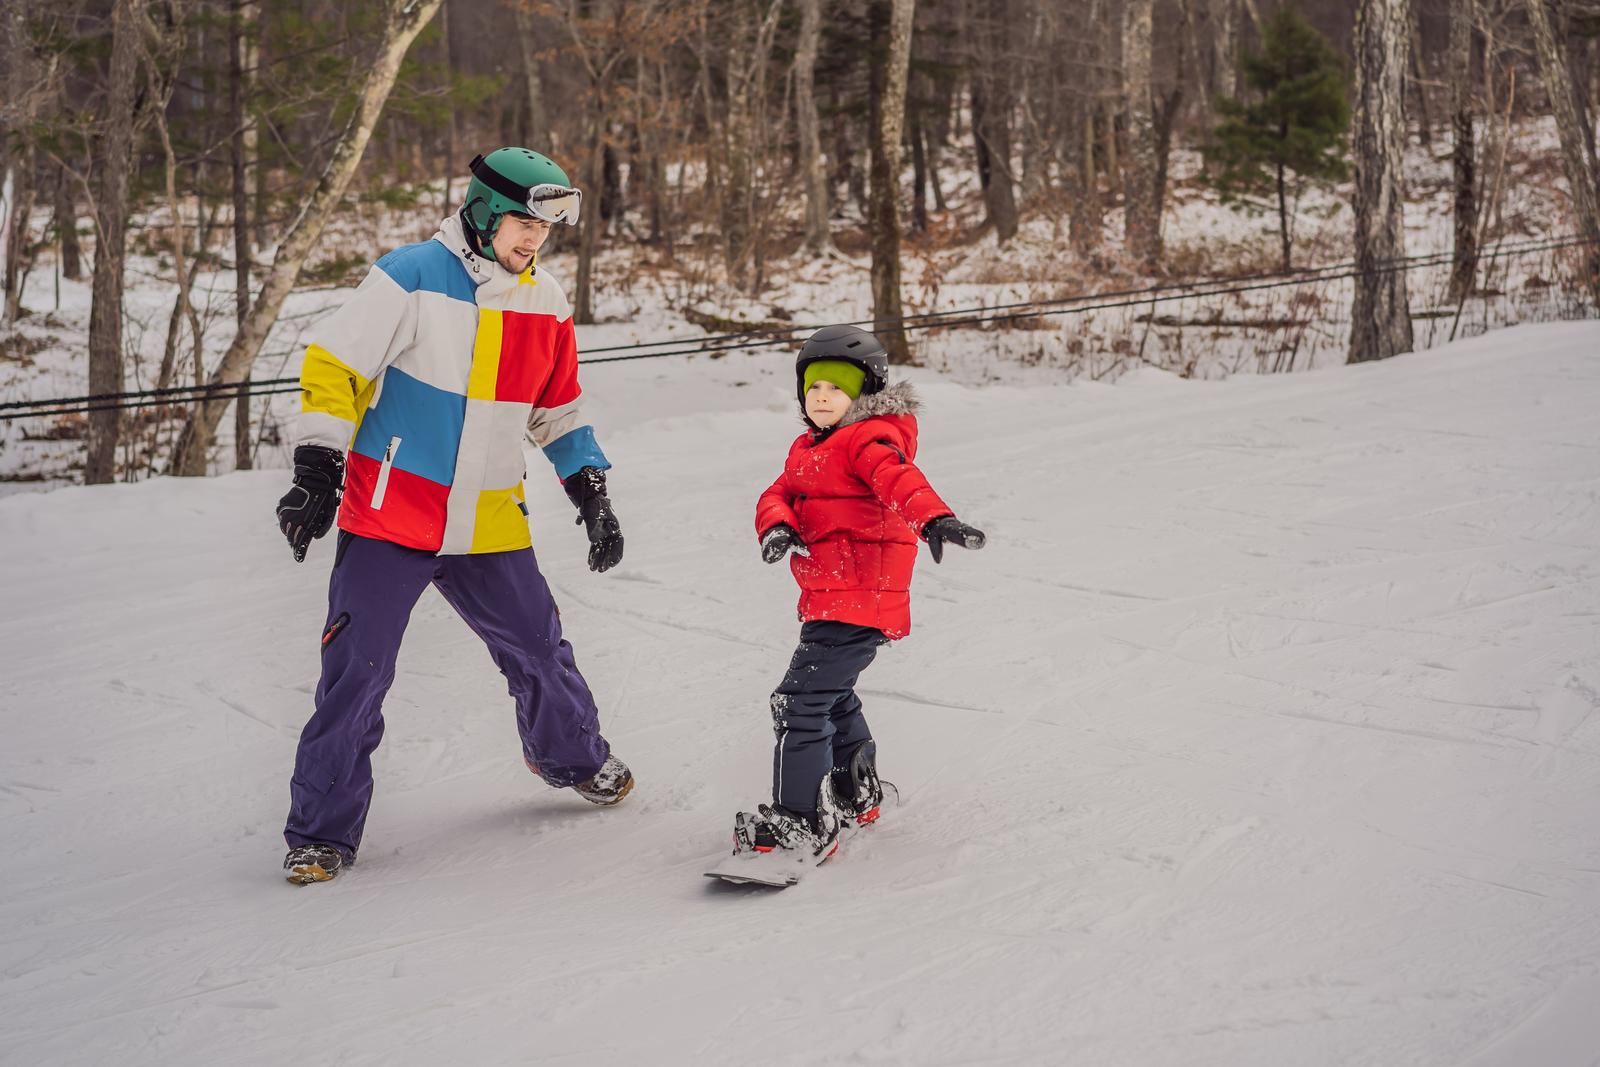 Snowboard instructor teaches a boy to snowboarding. Activities for children in winter. Children's winter sport. Lifestyle.